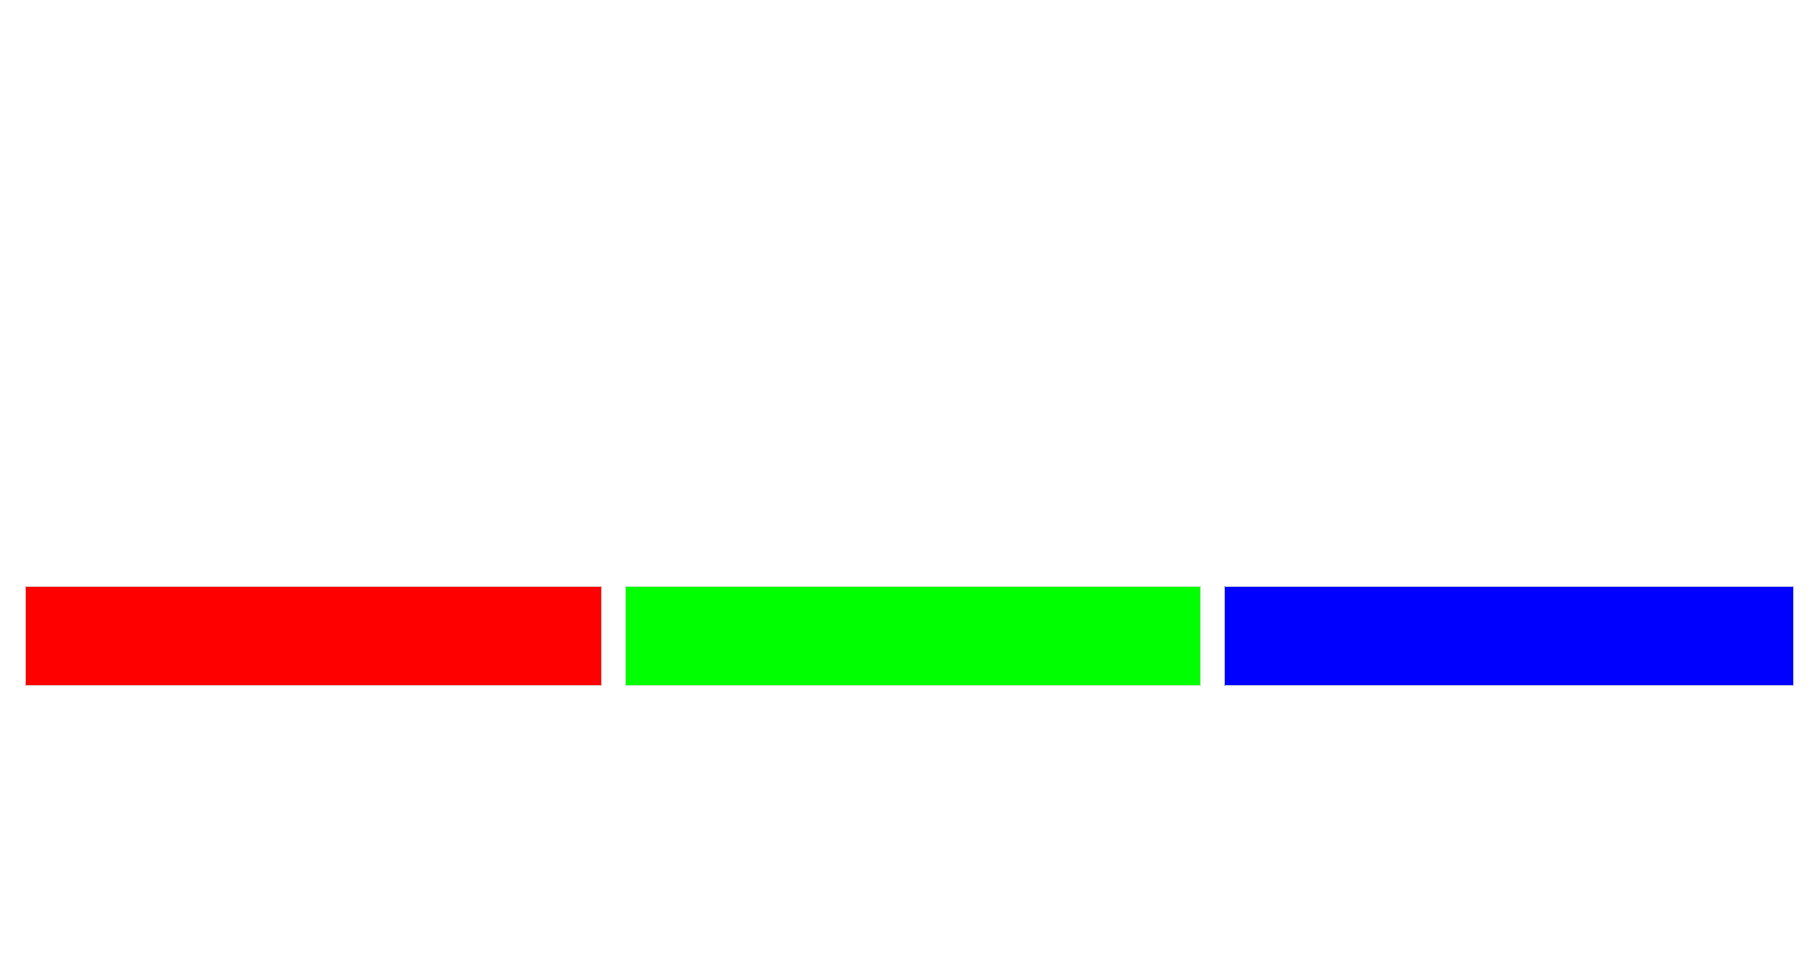 AVB Integration Services